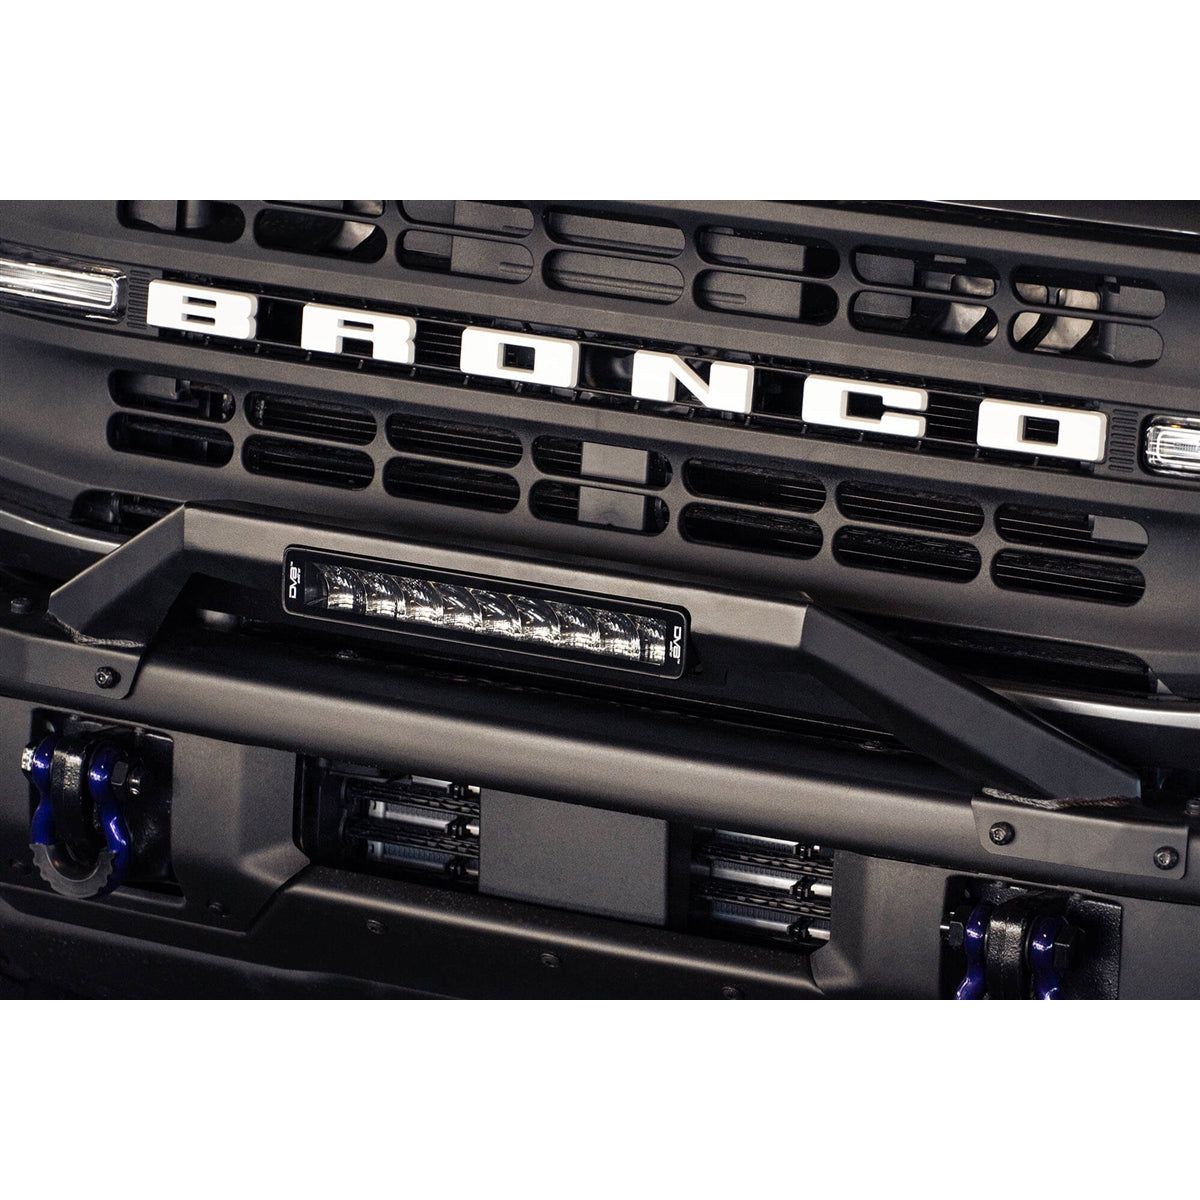 DV8 Offroad Factory Modular Front Bumper Bull Bar (OEM Modular Steel Front Bumper) for 2021-C Ford Bronco